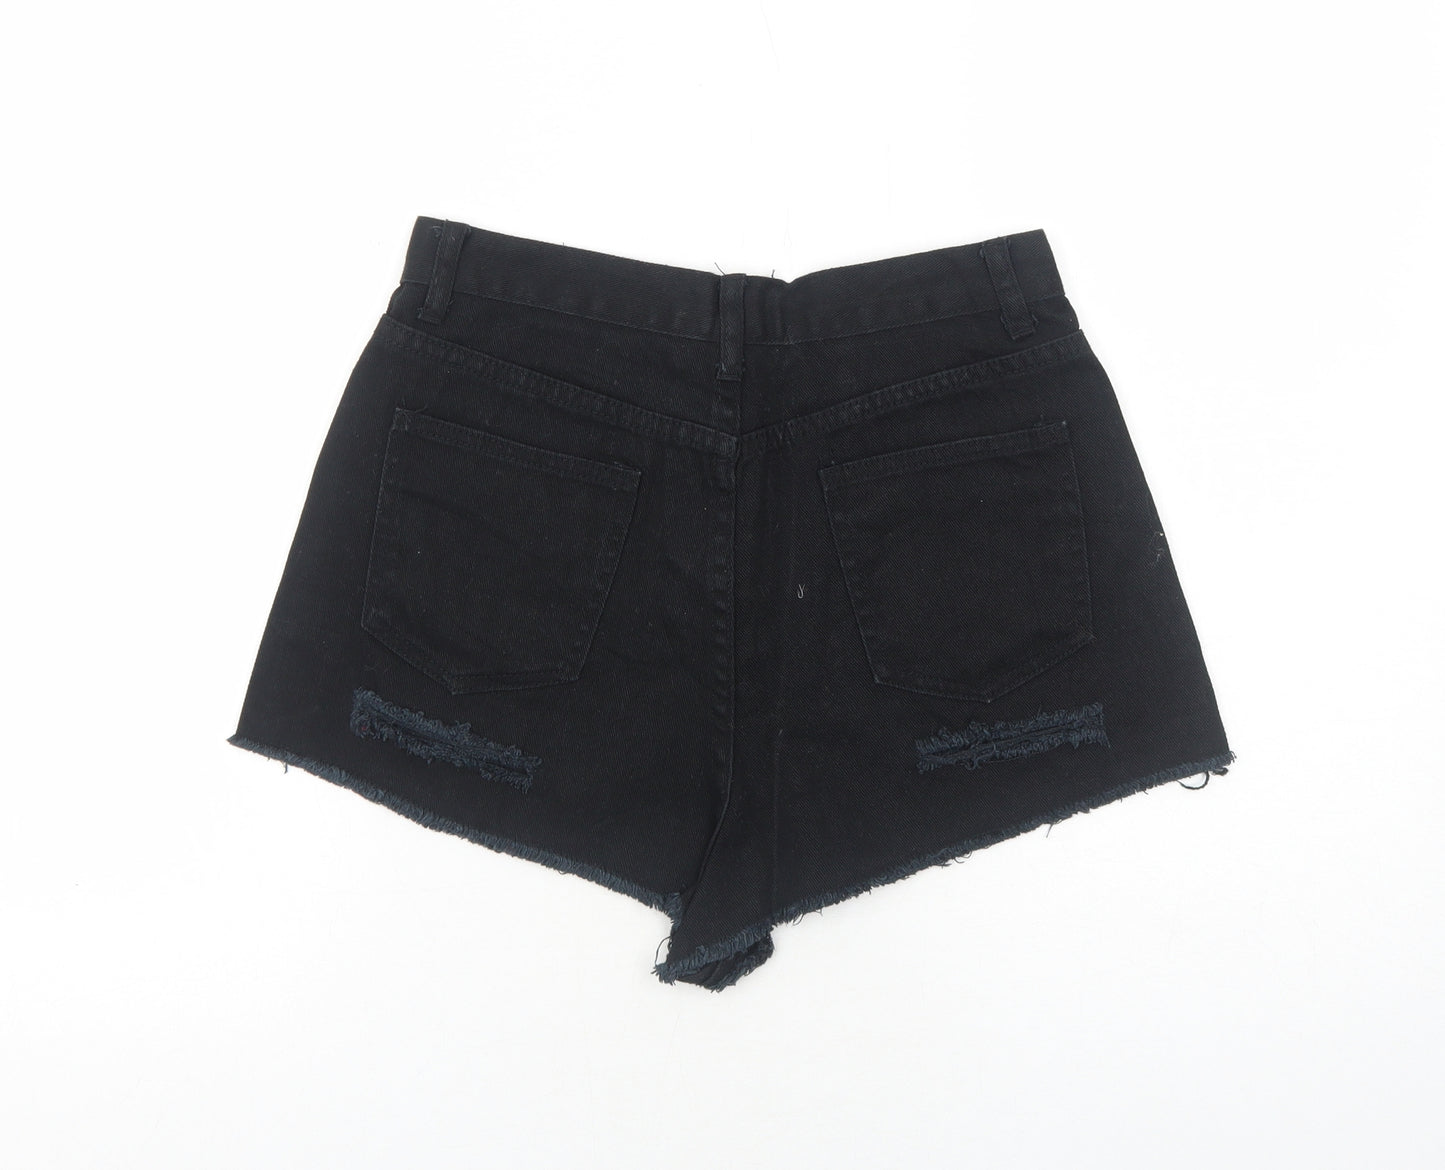 Missguided Womens Black Cotton Hot Pants Shorts Size 10 Regular Zip